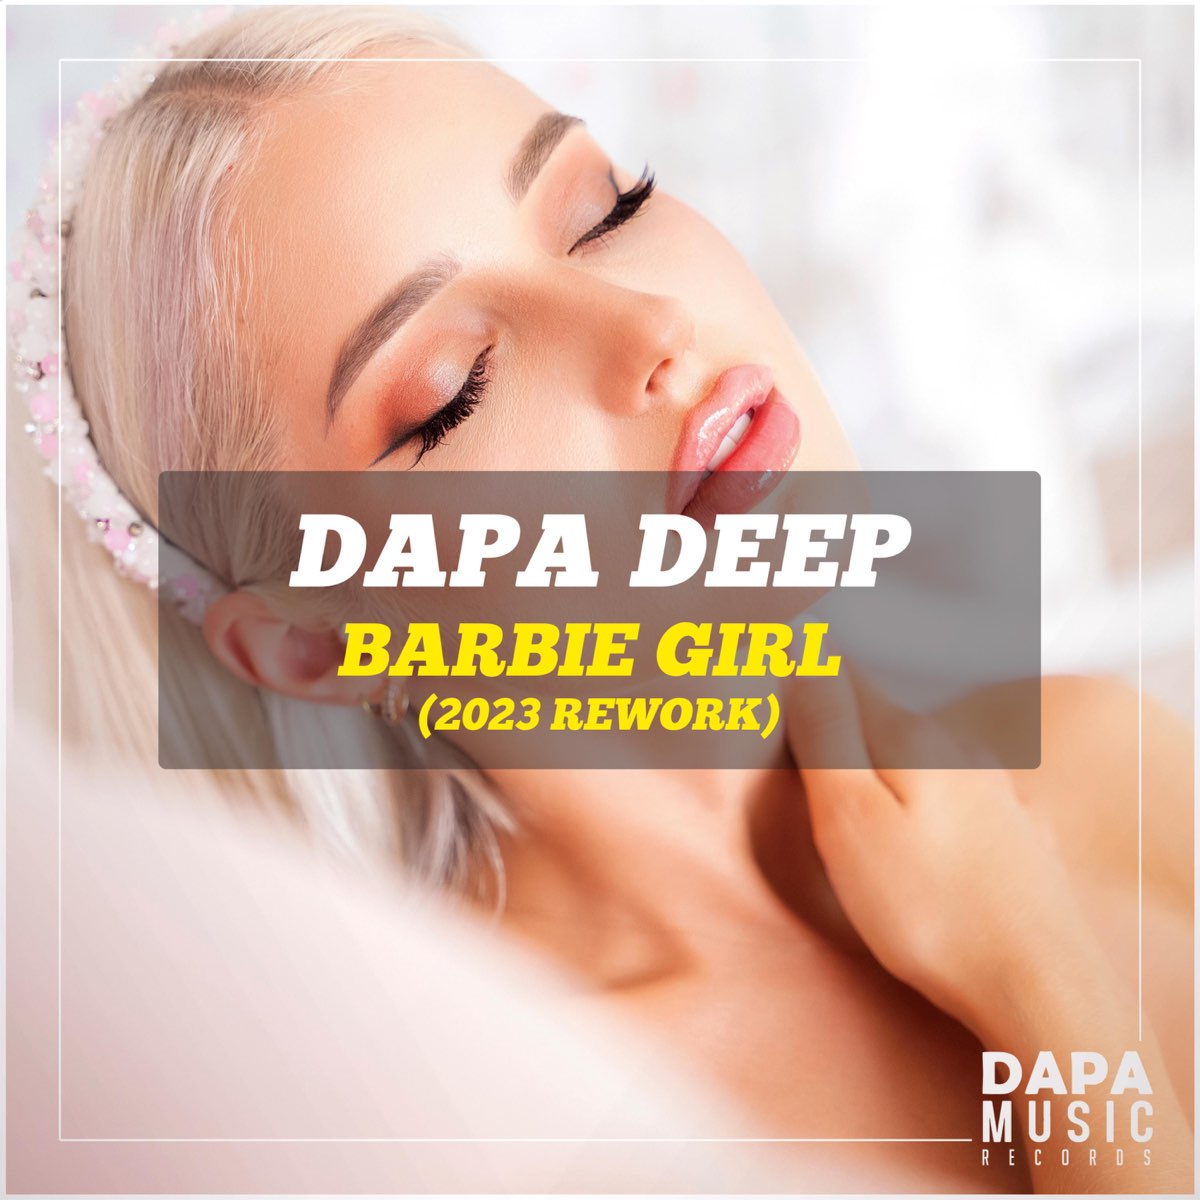 ‎barbie Girl 2023 Rework Single By Dapa Deep On Apple Music 